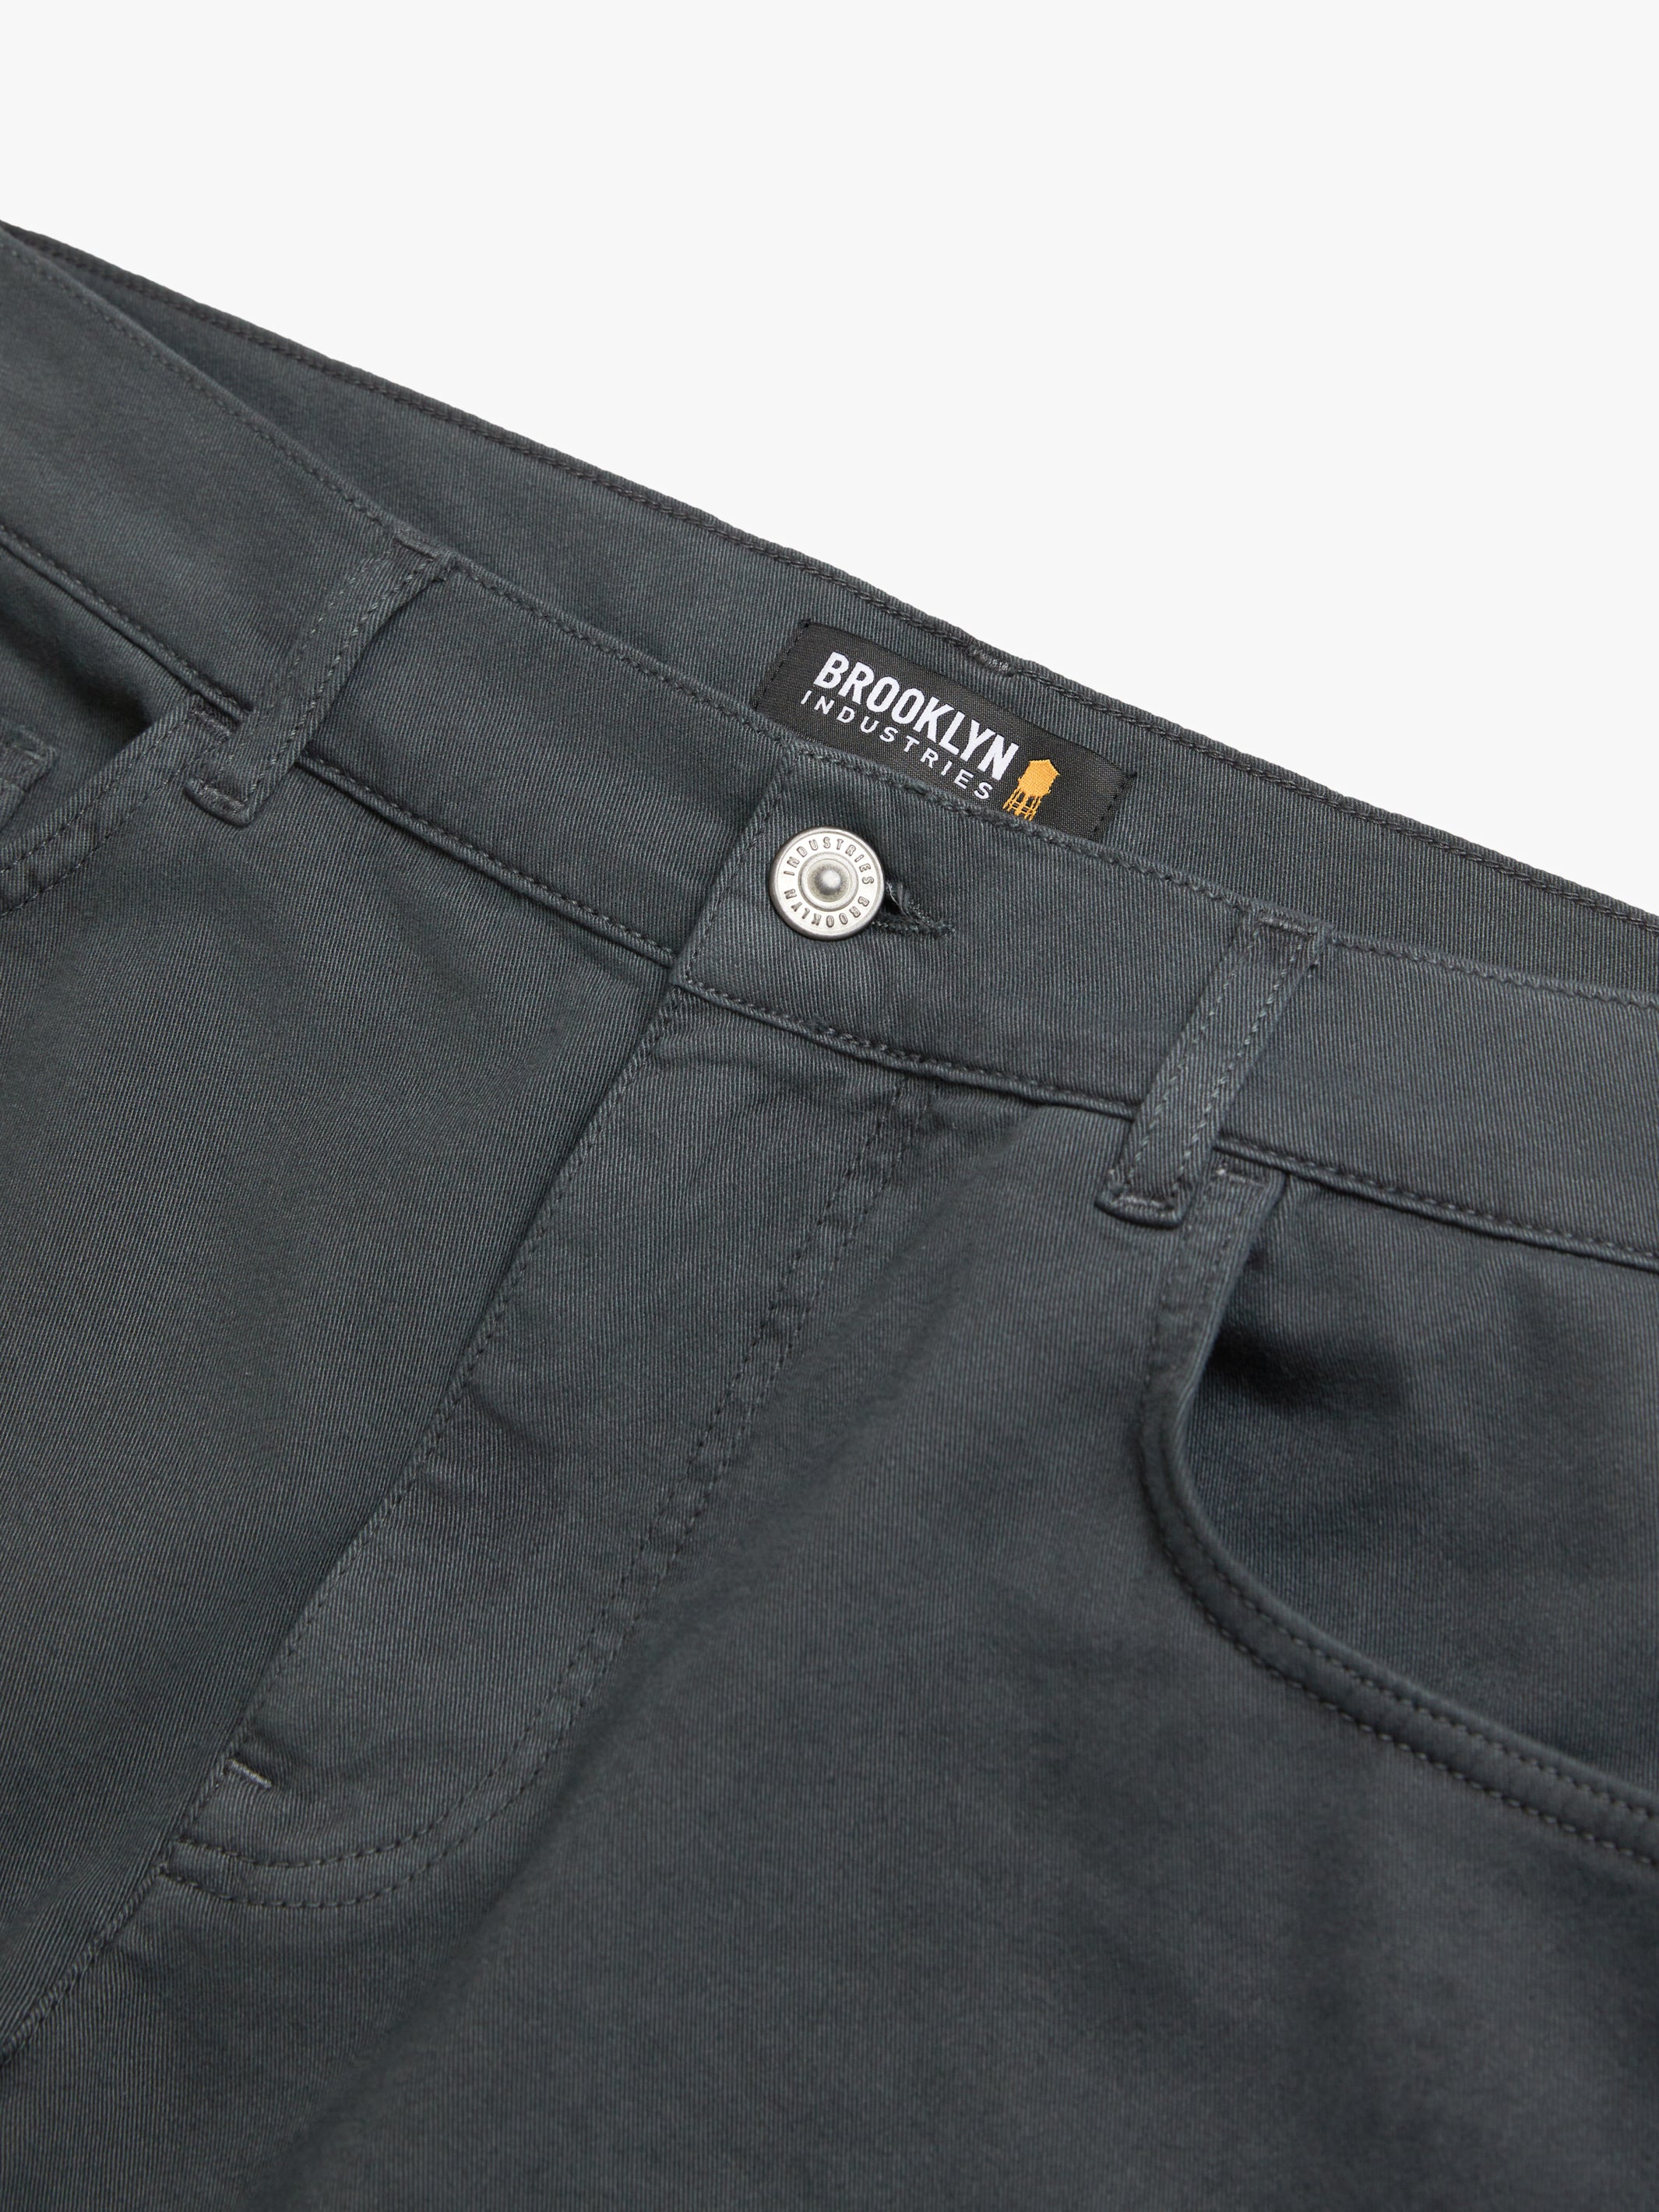 Men's Cargo Shorts in Asphalt - BROOKLYN INDUSTRIES